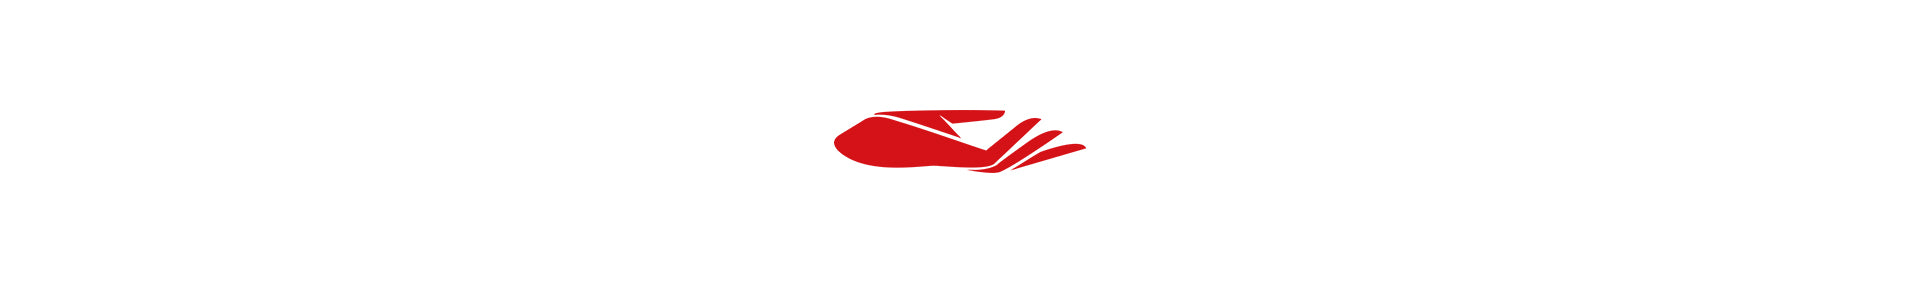 Red Provide hand logo